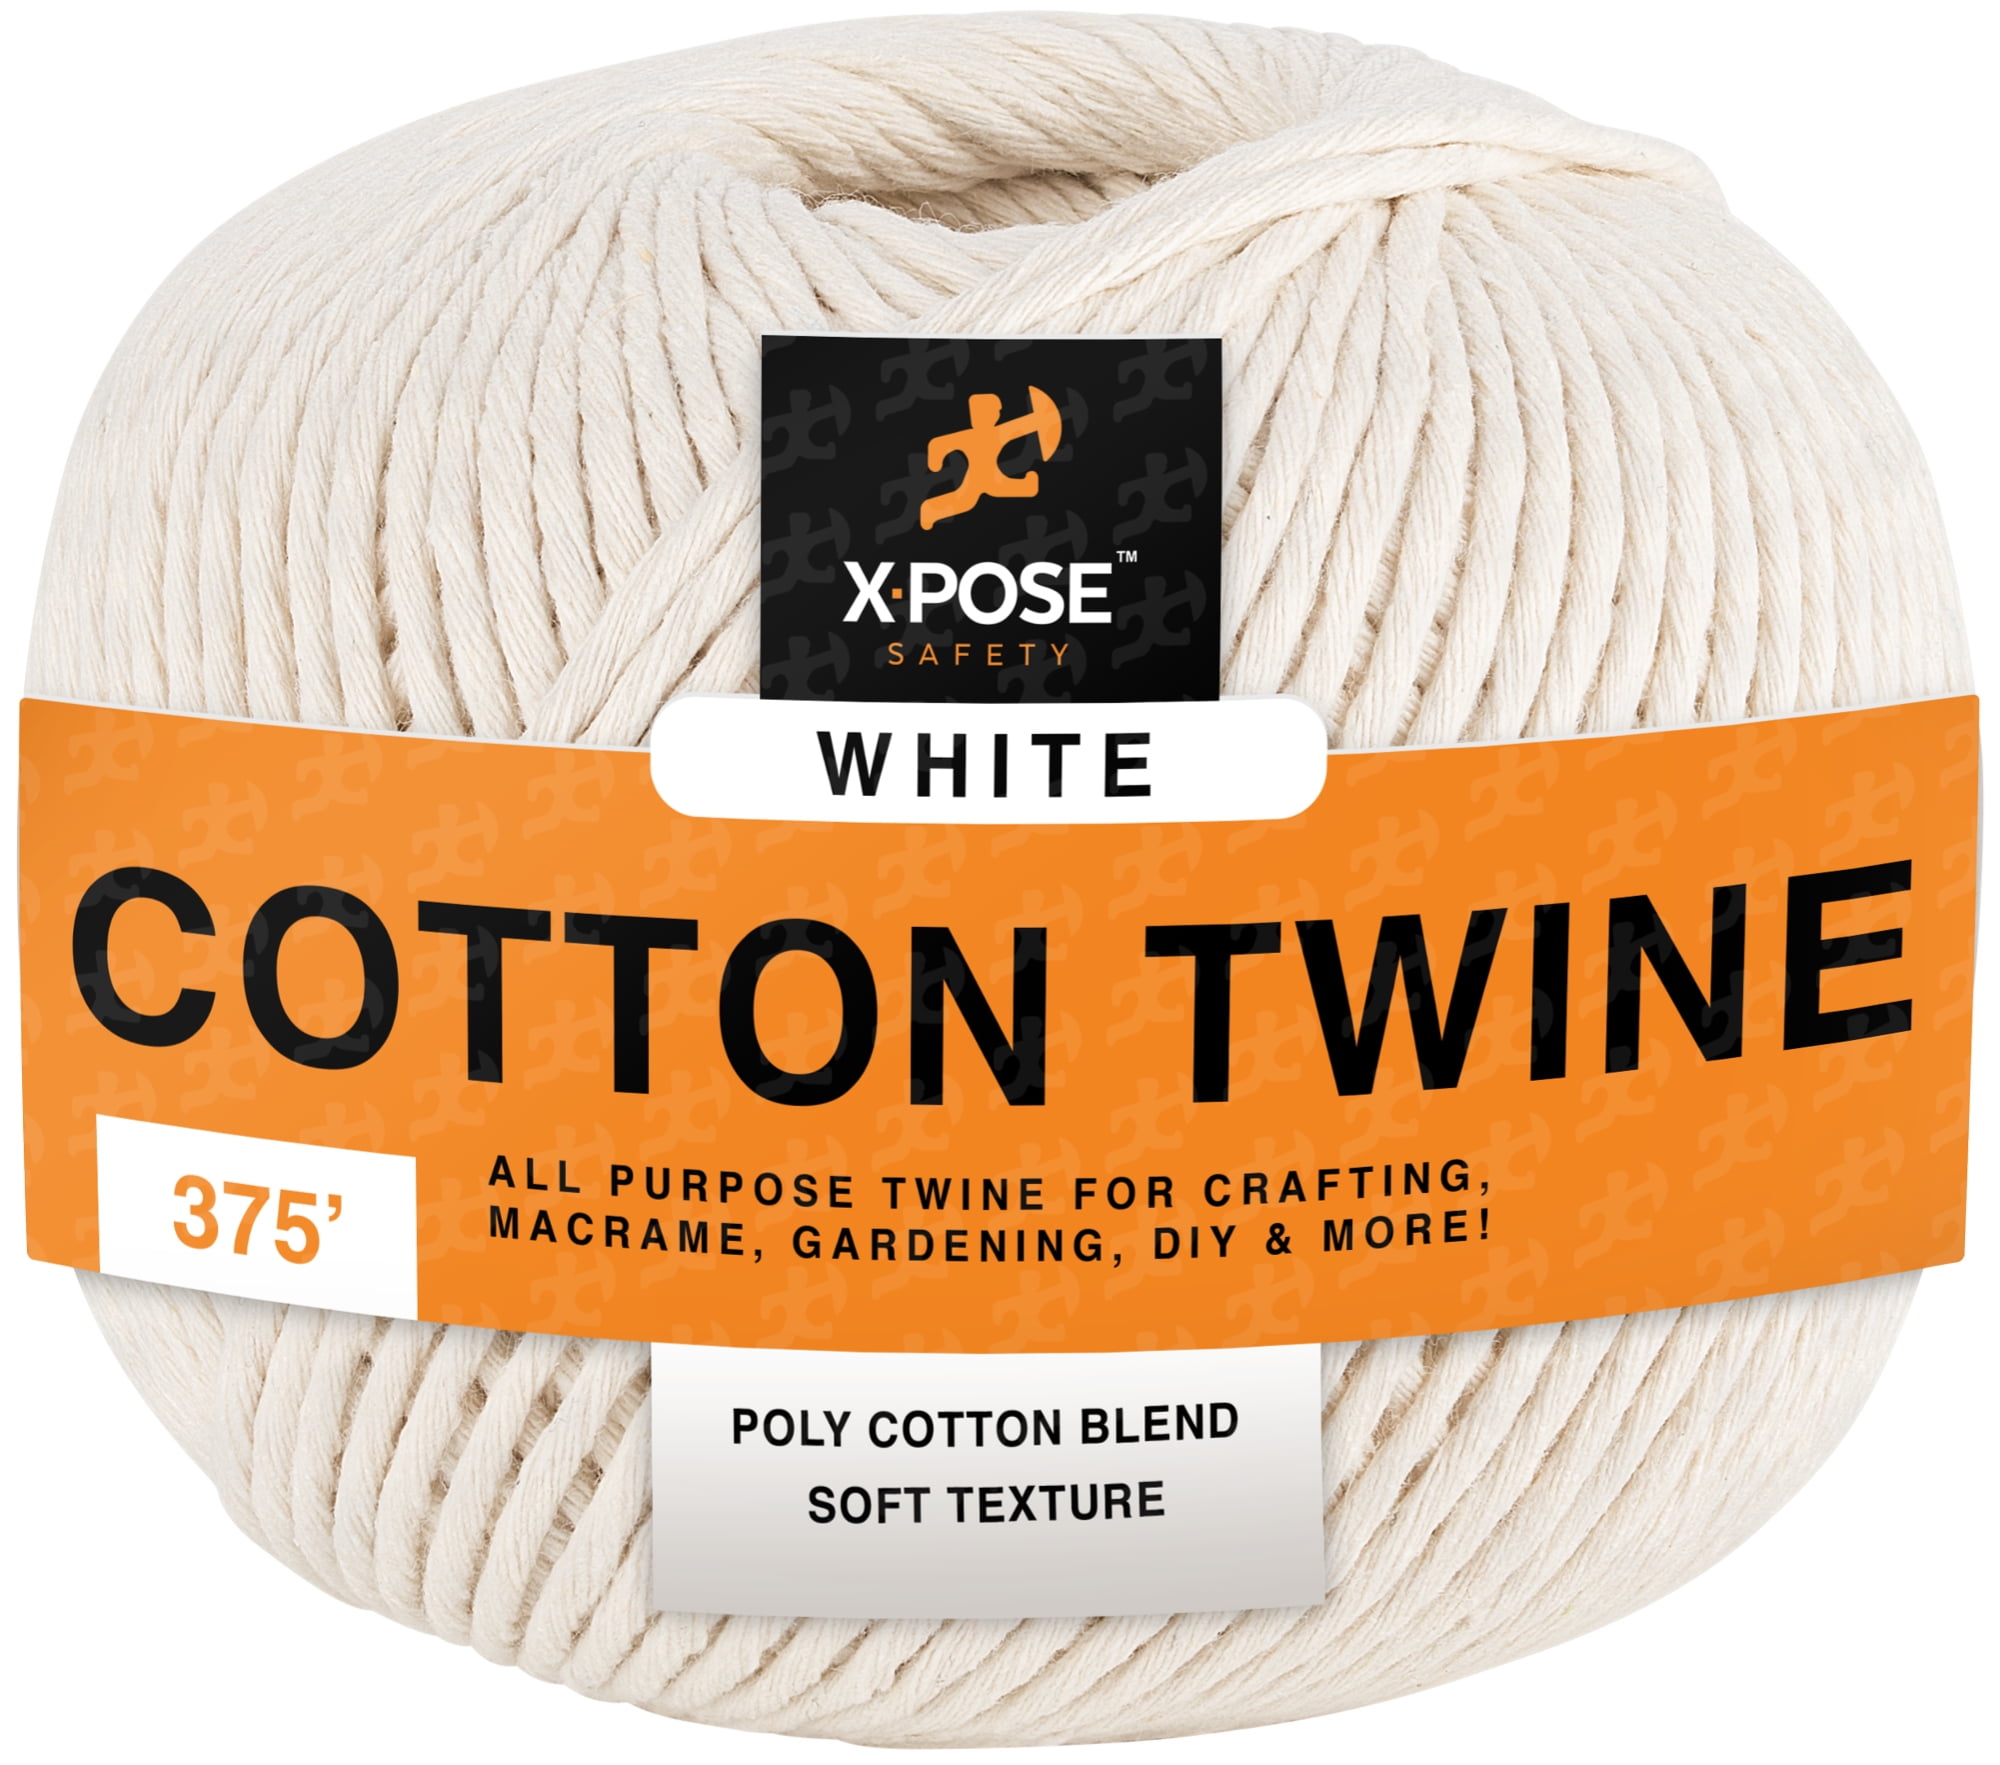 Lem 1/2 lb Cotton Twine Ball